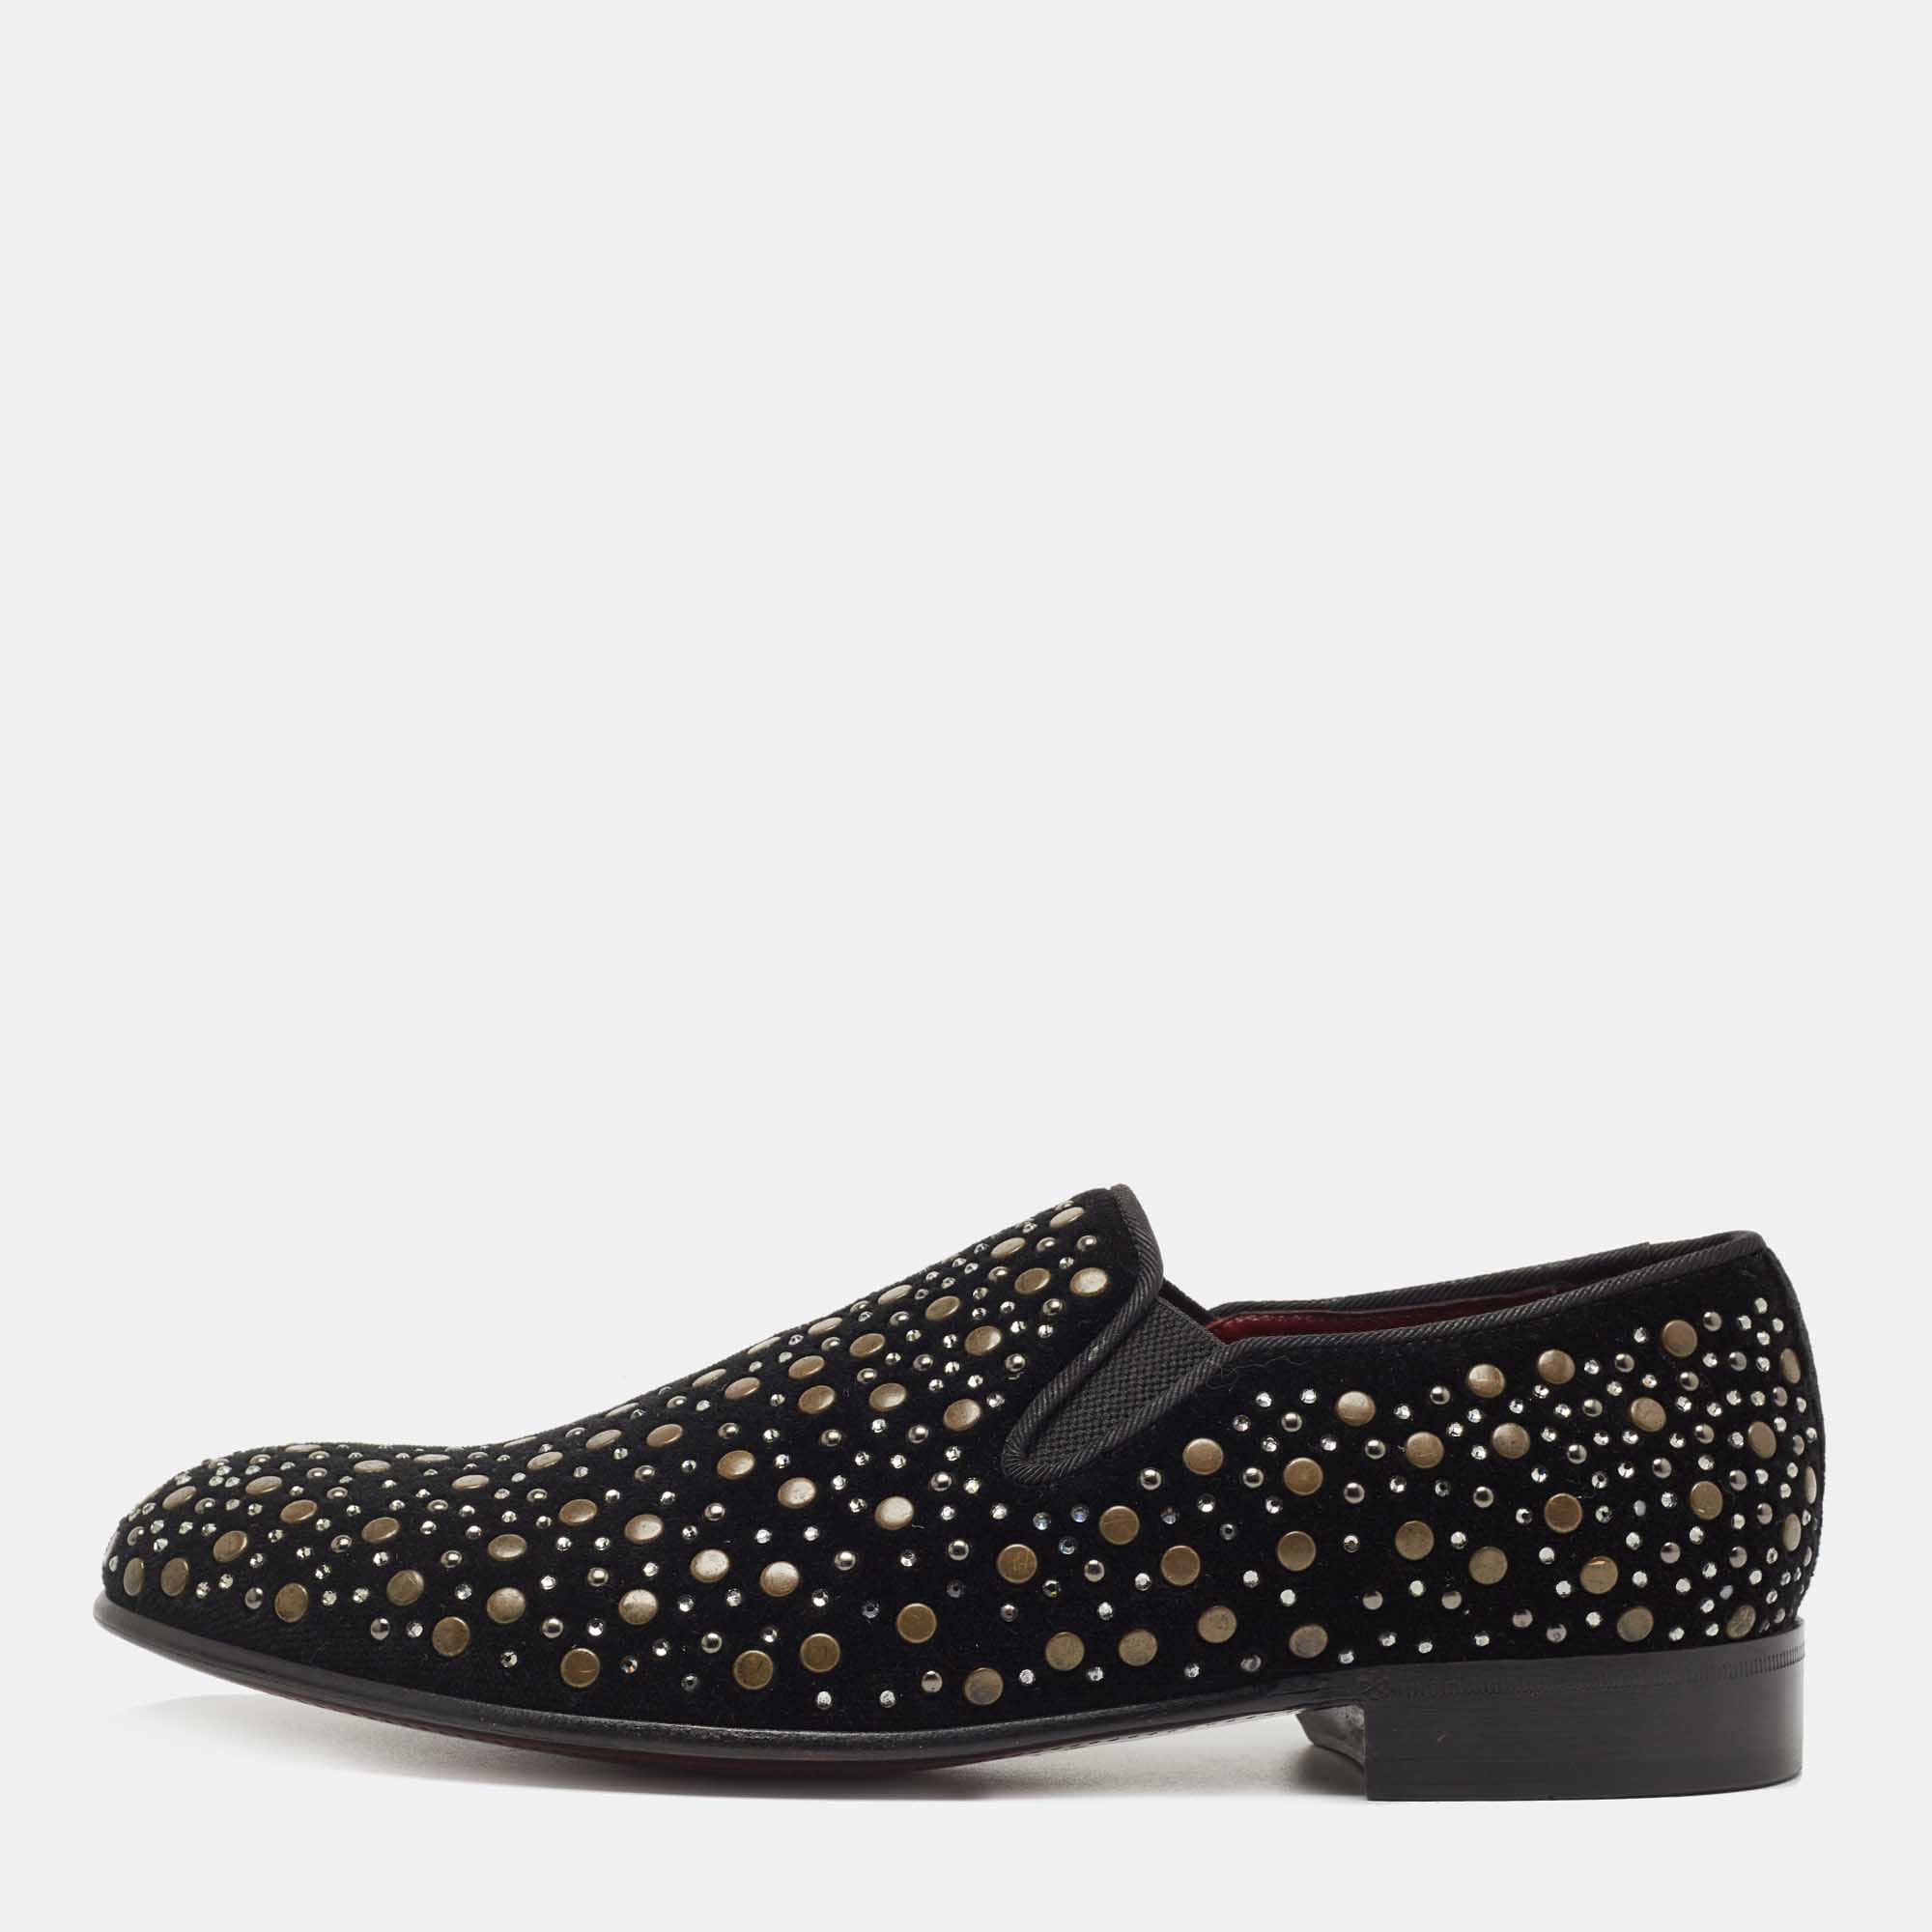 Dolce & Gabbana Black Velvet Crystal Studded Loafers Size 41